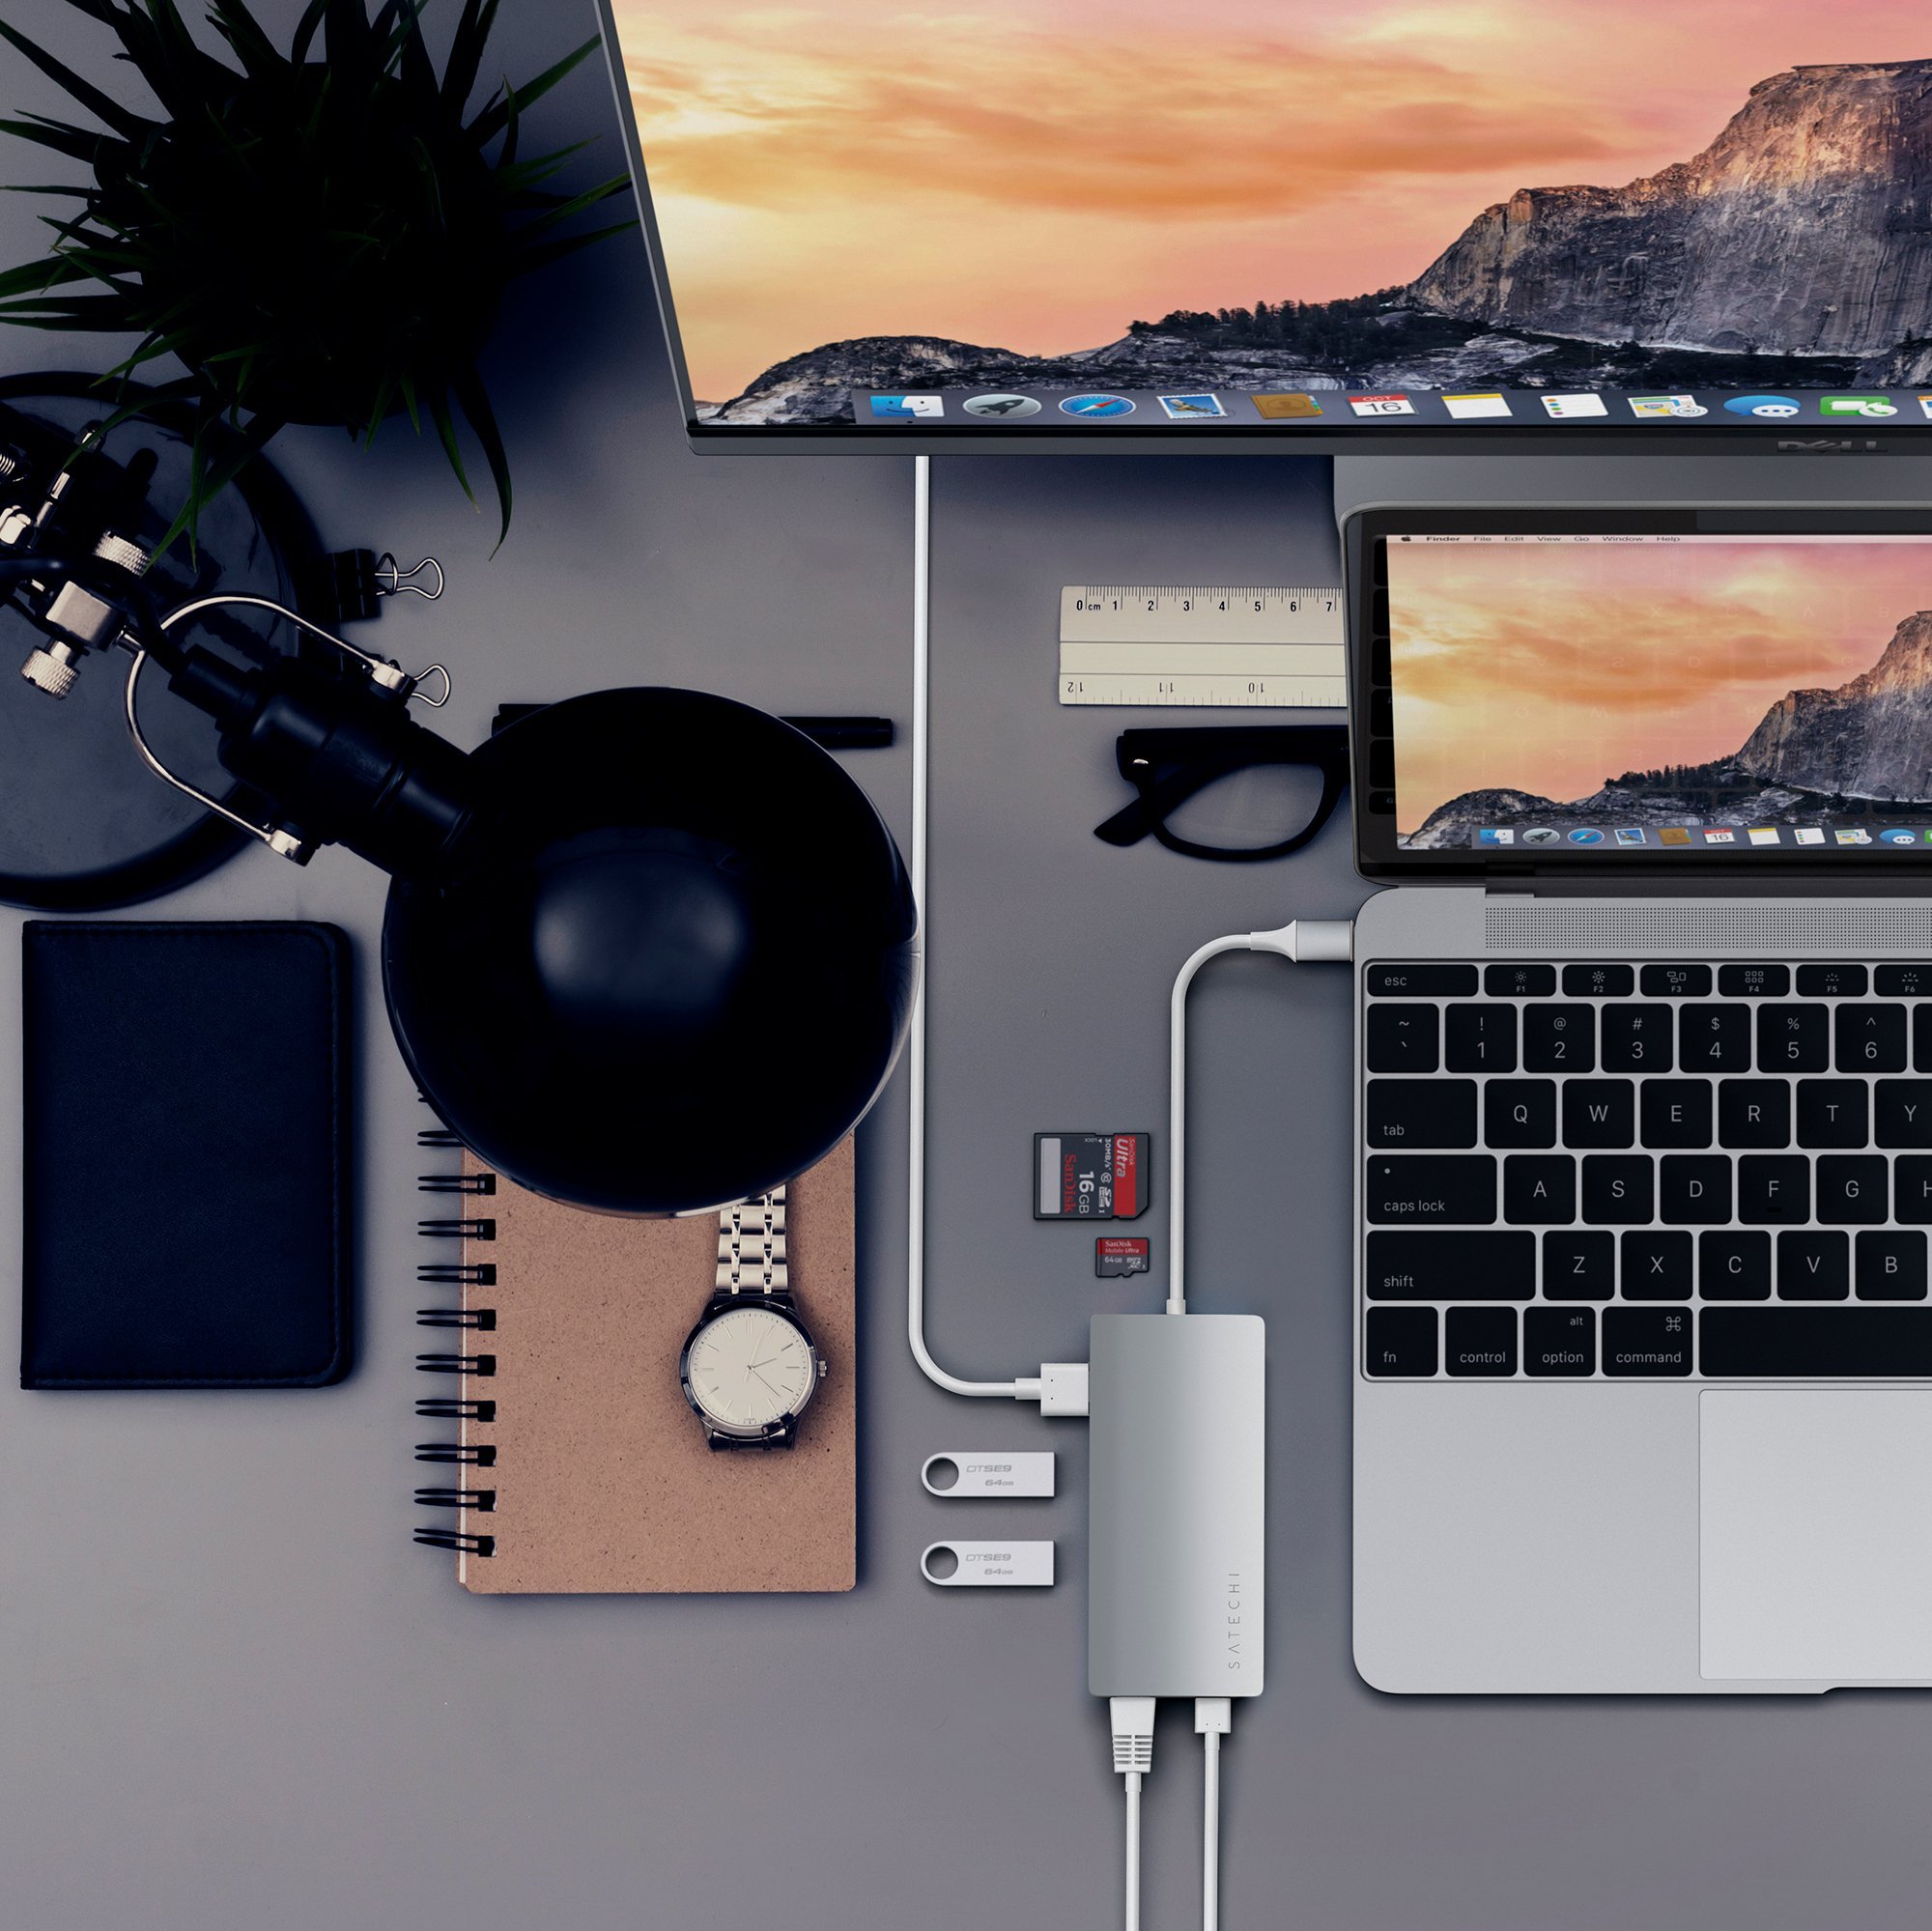 4K@30Hz HDMI,TF//SD Card Reader USB-C PD Docking for MacBook Pro 13/″ 15/″ 16/″2017-2020 /& MacBook Air 2020//2019//2018 Type C Hub Adapter UPGROW USB C Hub MacBook Pro Accessories with 3 USB 3.0 Ports